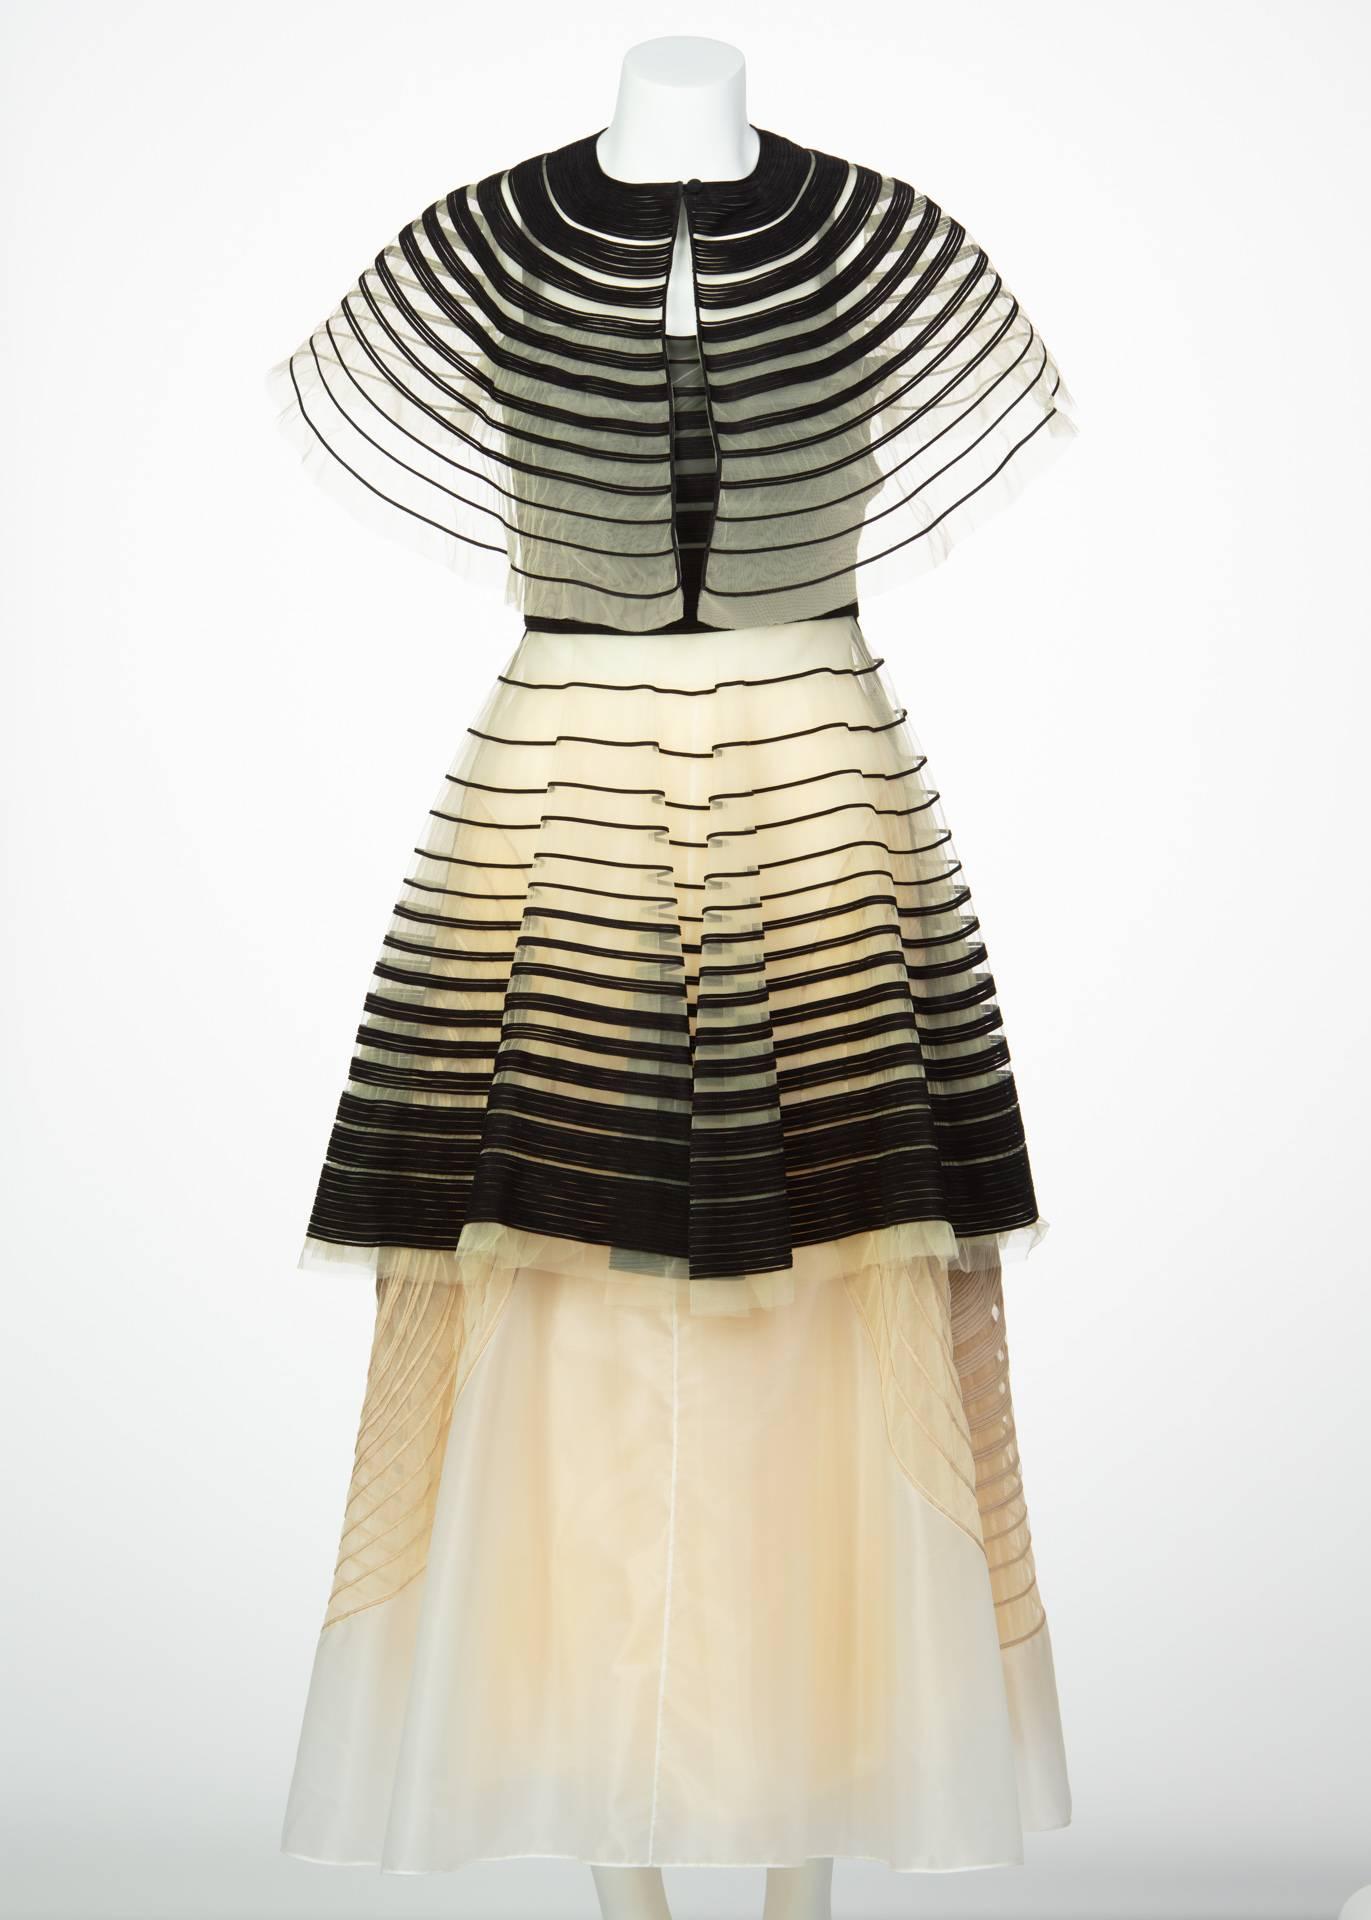 Fendi Karl Lagerfeld S/S 2008 Runway Black Cut Out Suede Dress Cape Skirt Set en vente 1